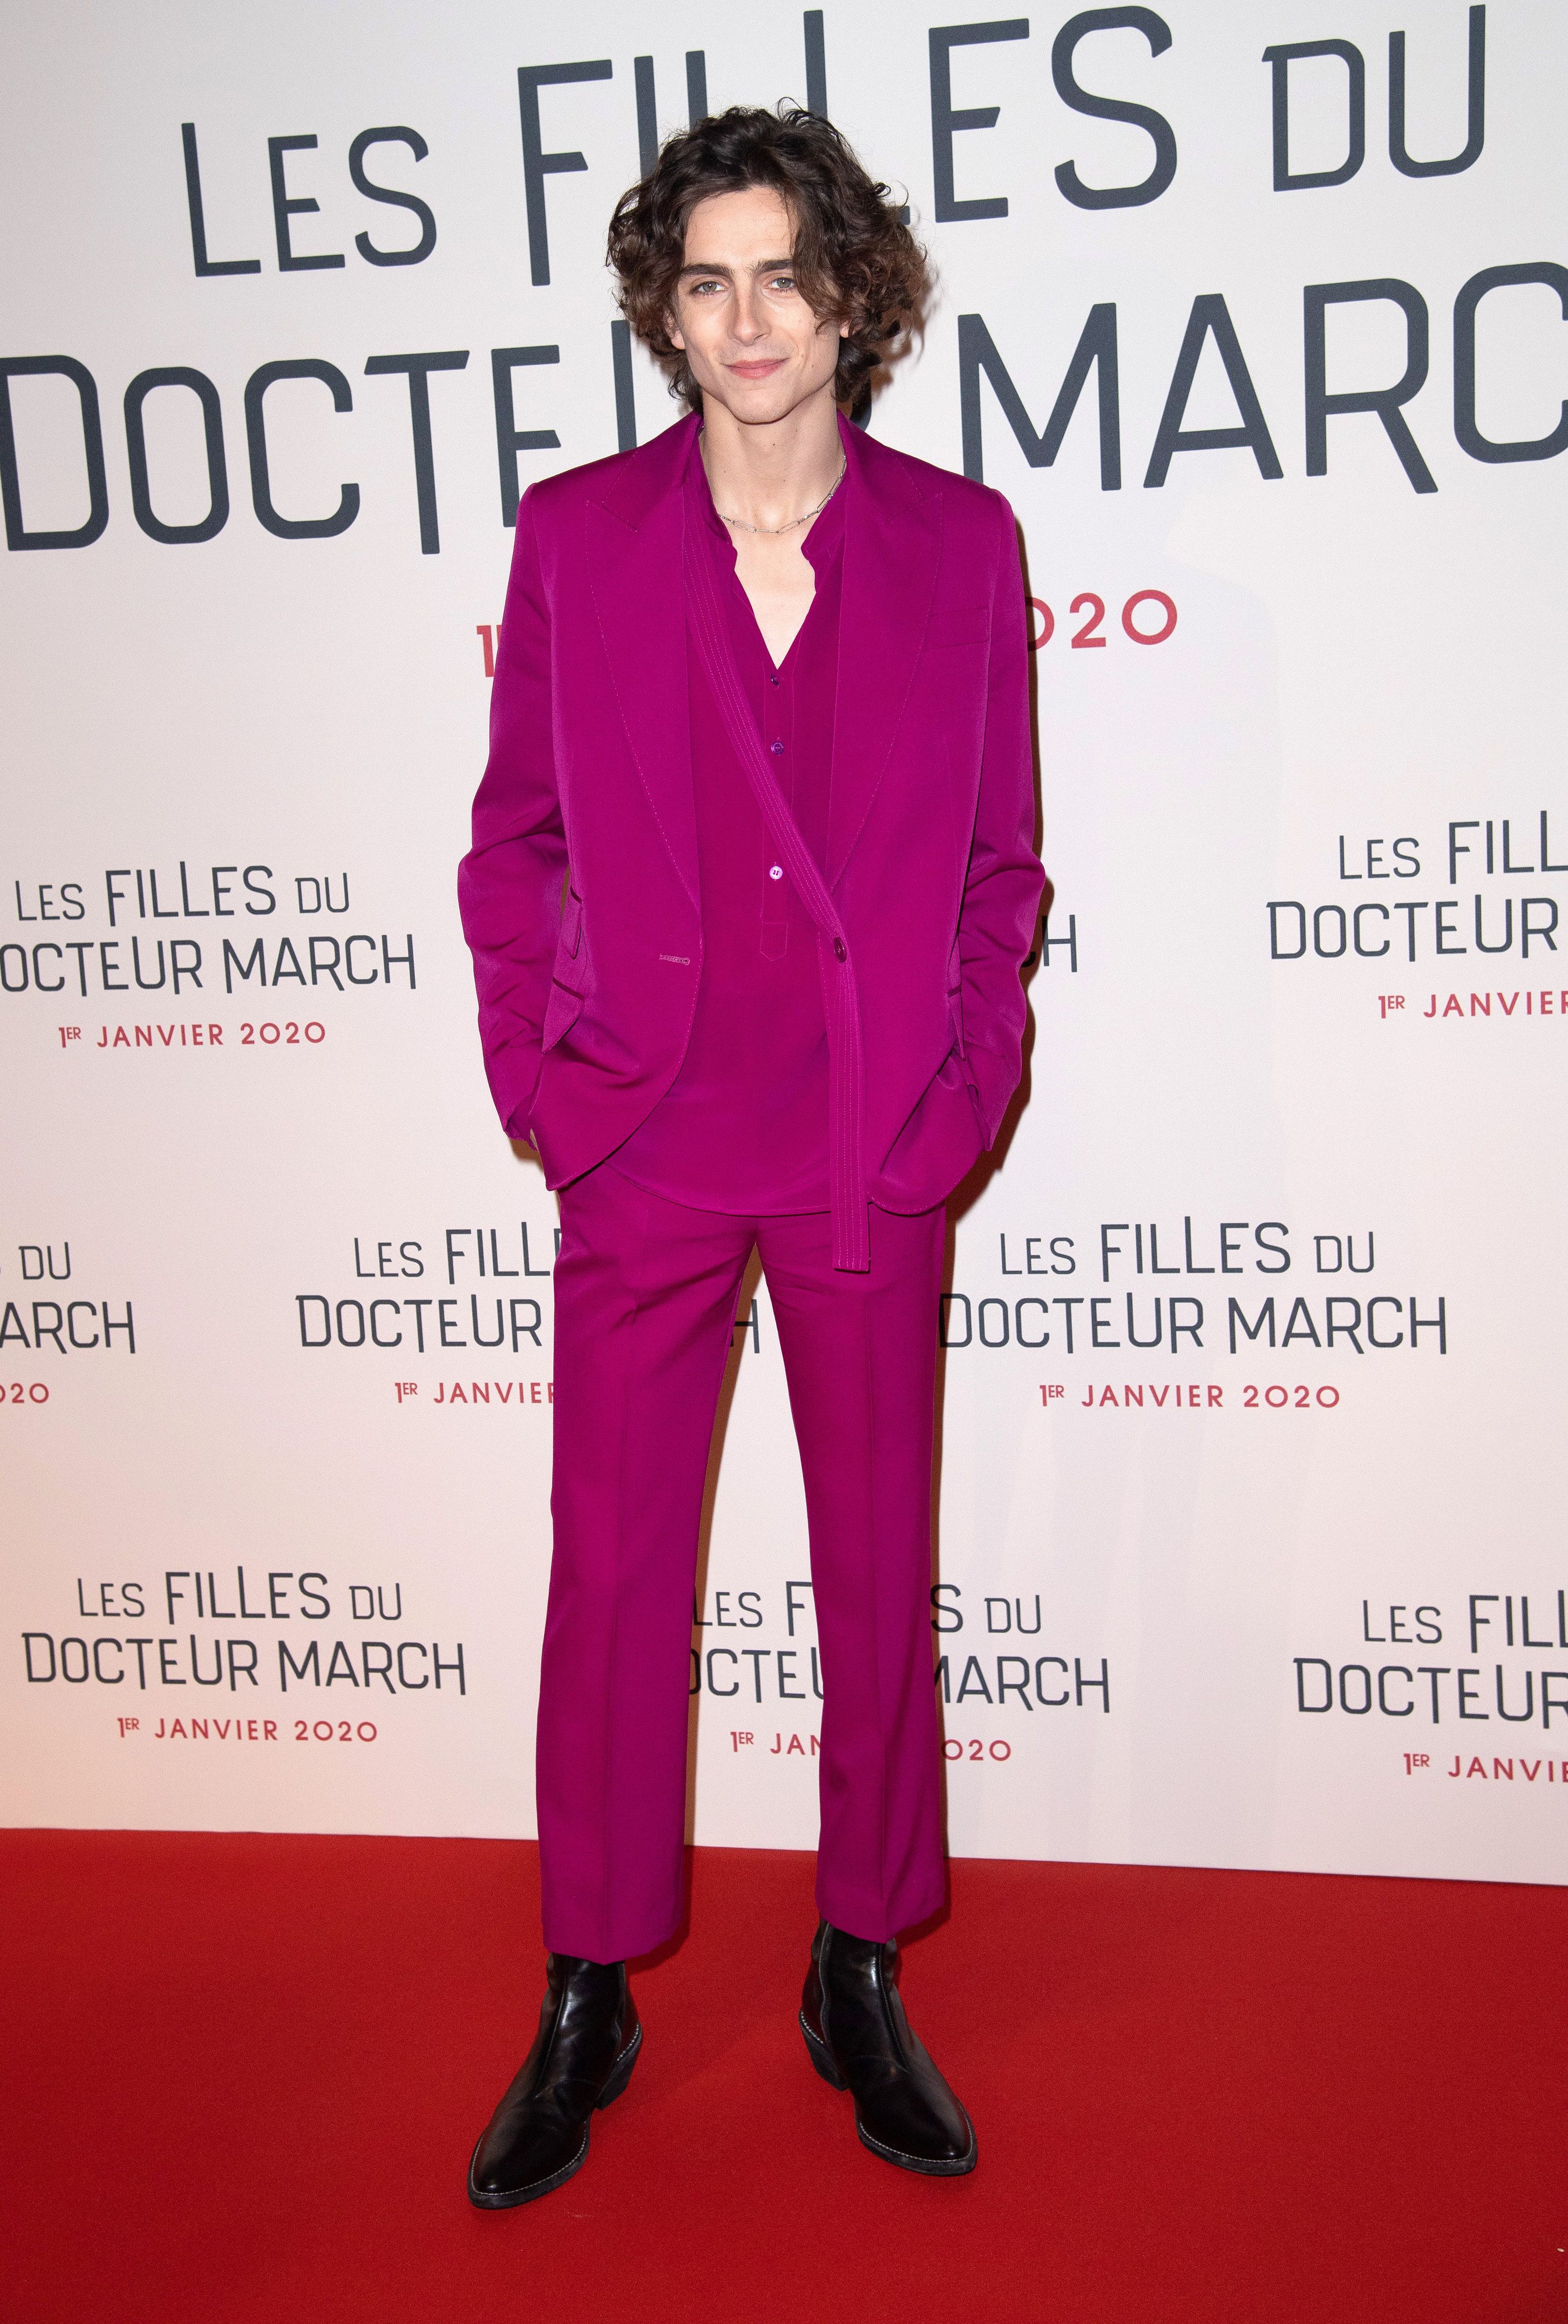 Timothée Chalamet - Page 3 of 14 - Red Carpet Fashion Awards